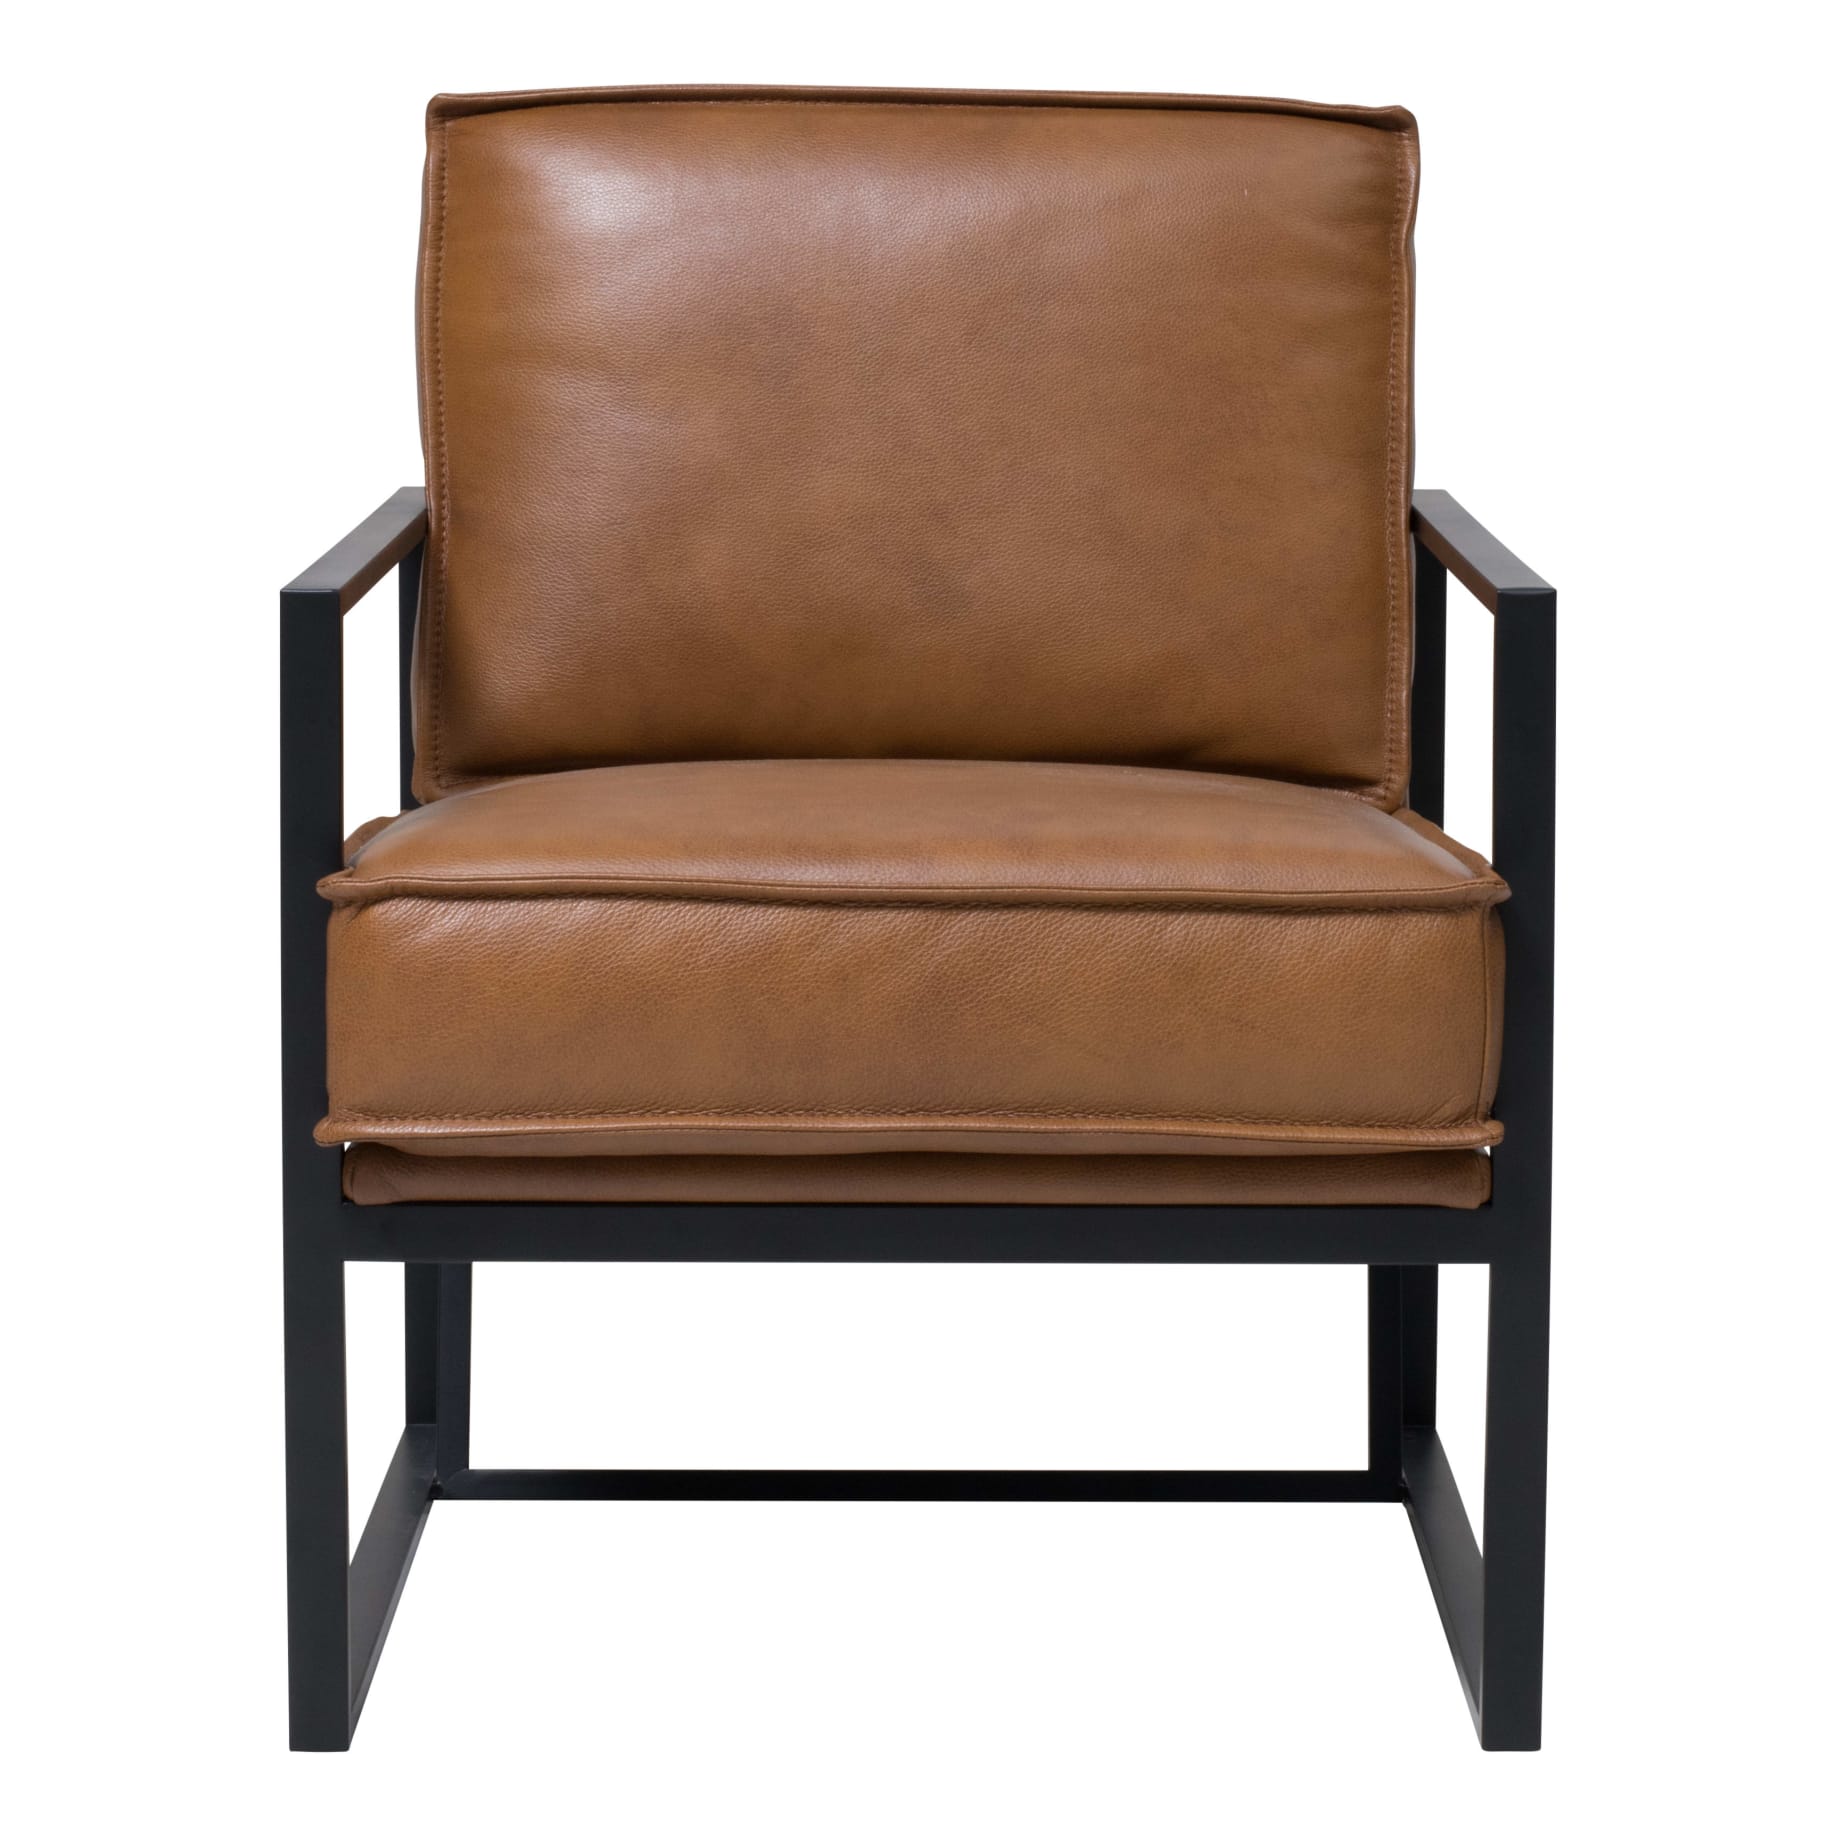 Hugo Designer Chair in Missouri Brown Leather